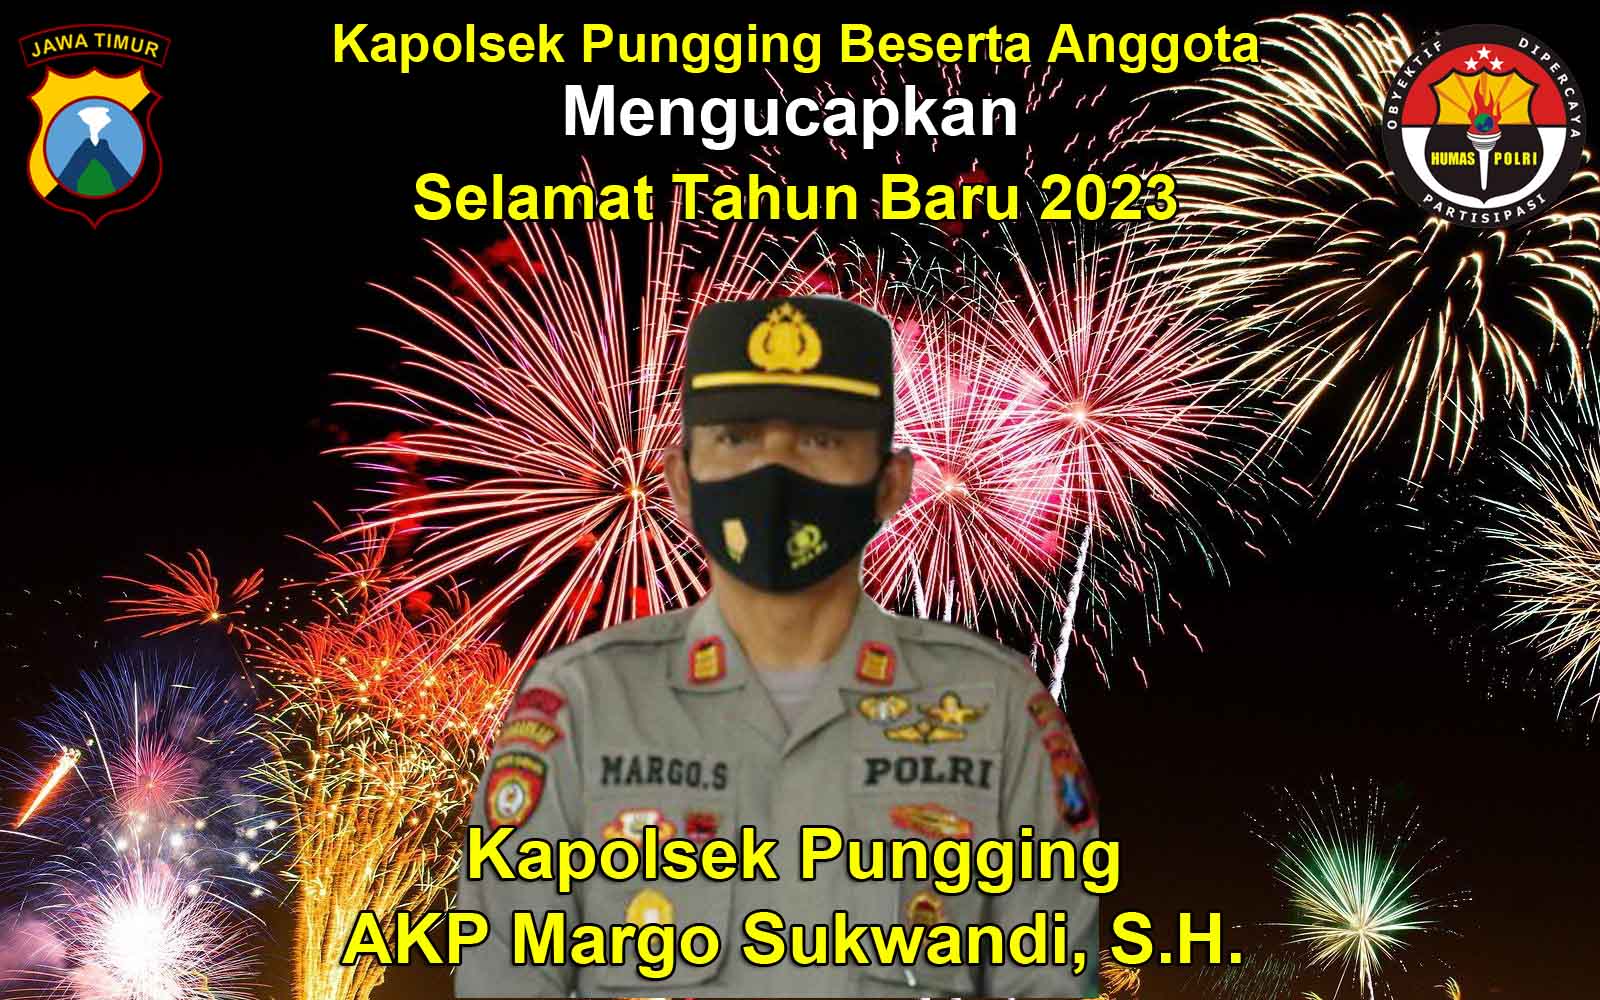 Kapolsek Pungging AKP Margo Sukwandi, S.H. Mengucapkan Selamat Tahun Baru 2023